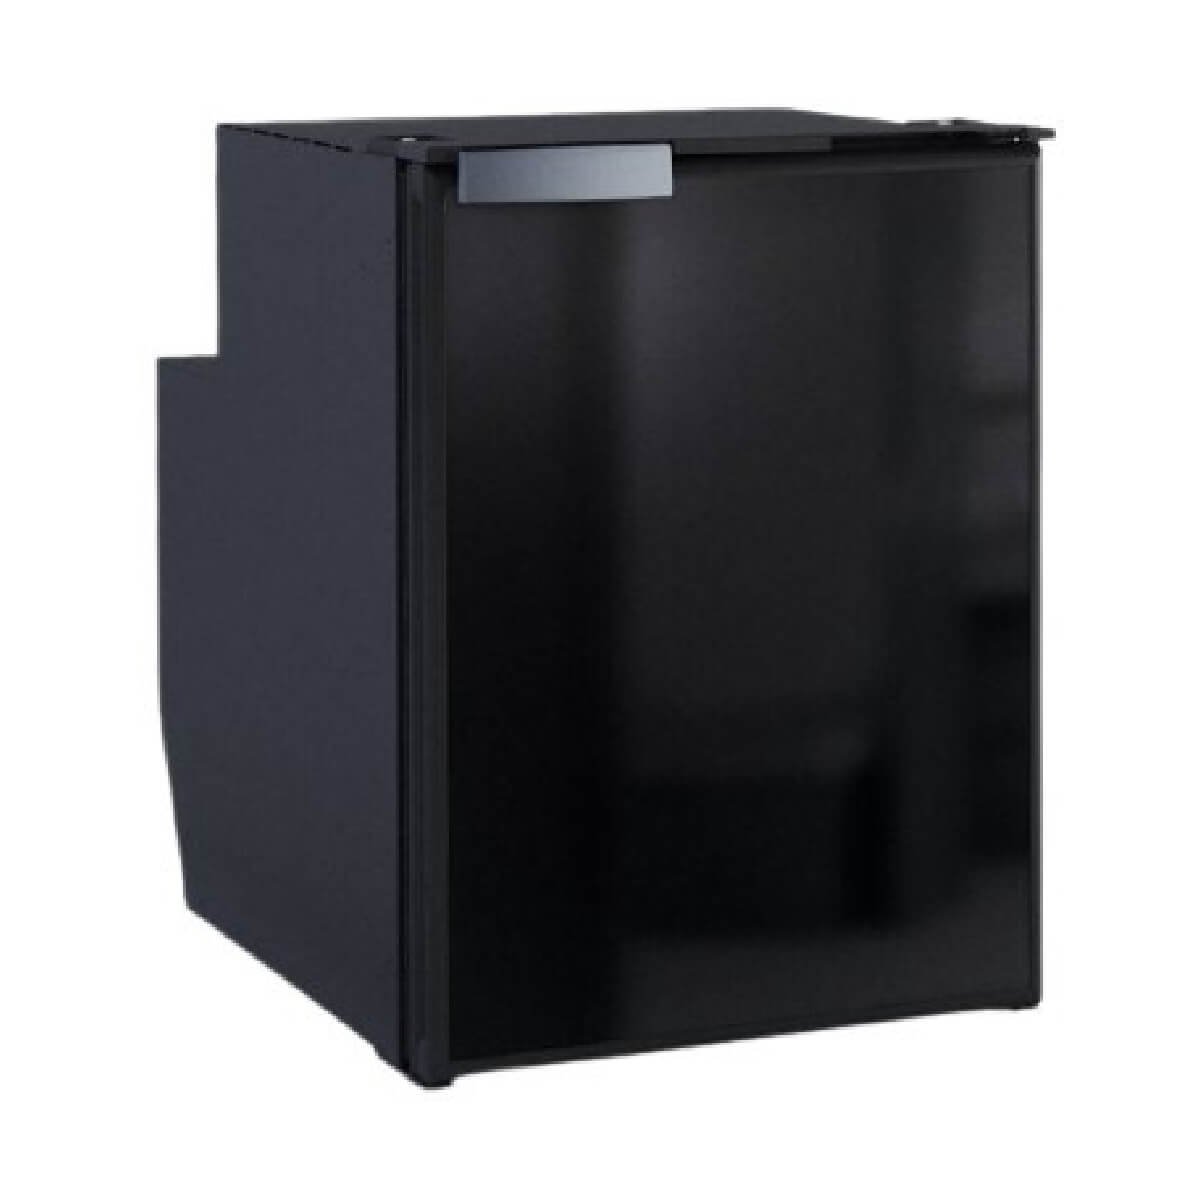 A sleek, black mini fridge with a single door, the Vitrifrigo C60i - 12V Compressor Fridge Freezer - Black or Grey combines modern design with compact efficiency.